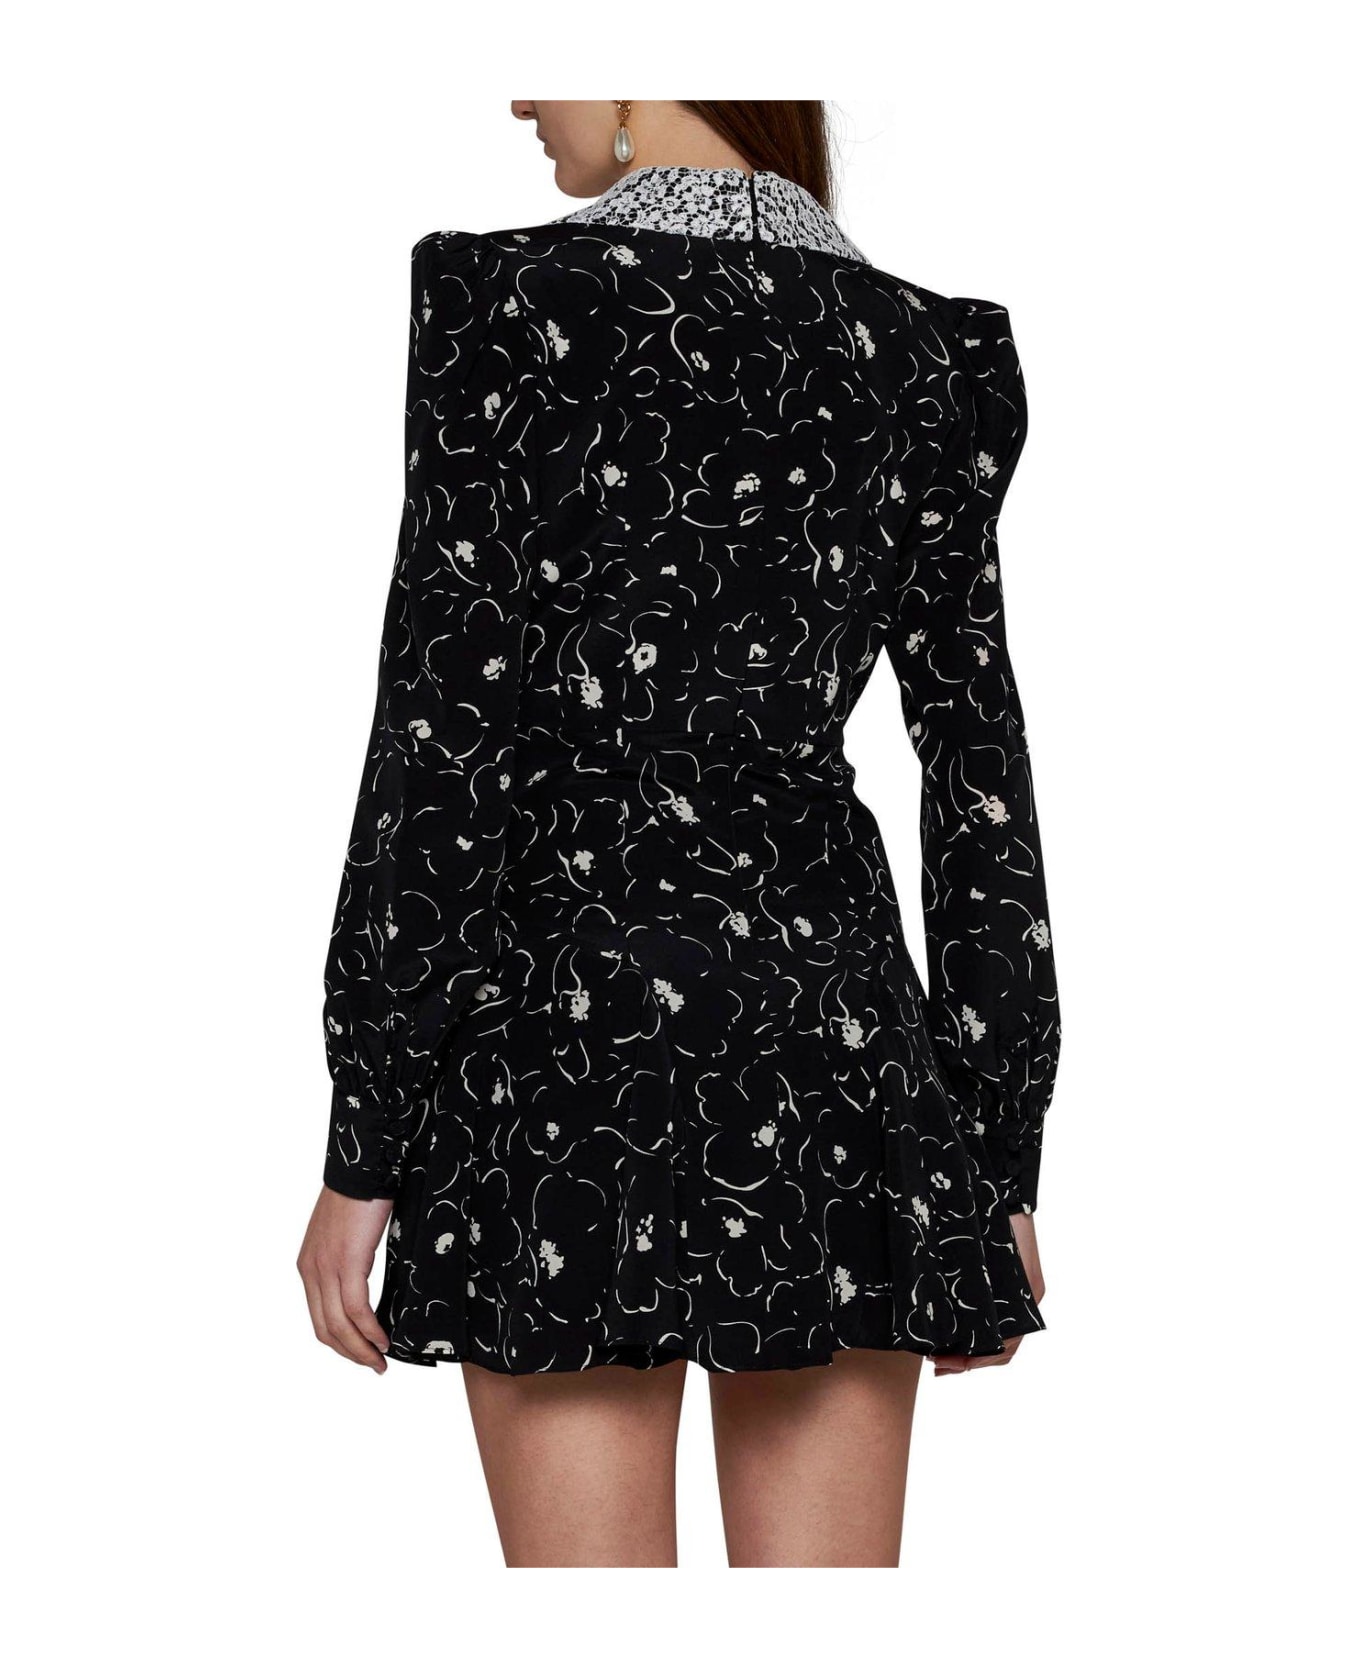 Alessandra Rich Bow Embellished Floral Printed Mini Dress - Black